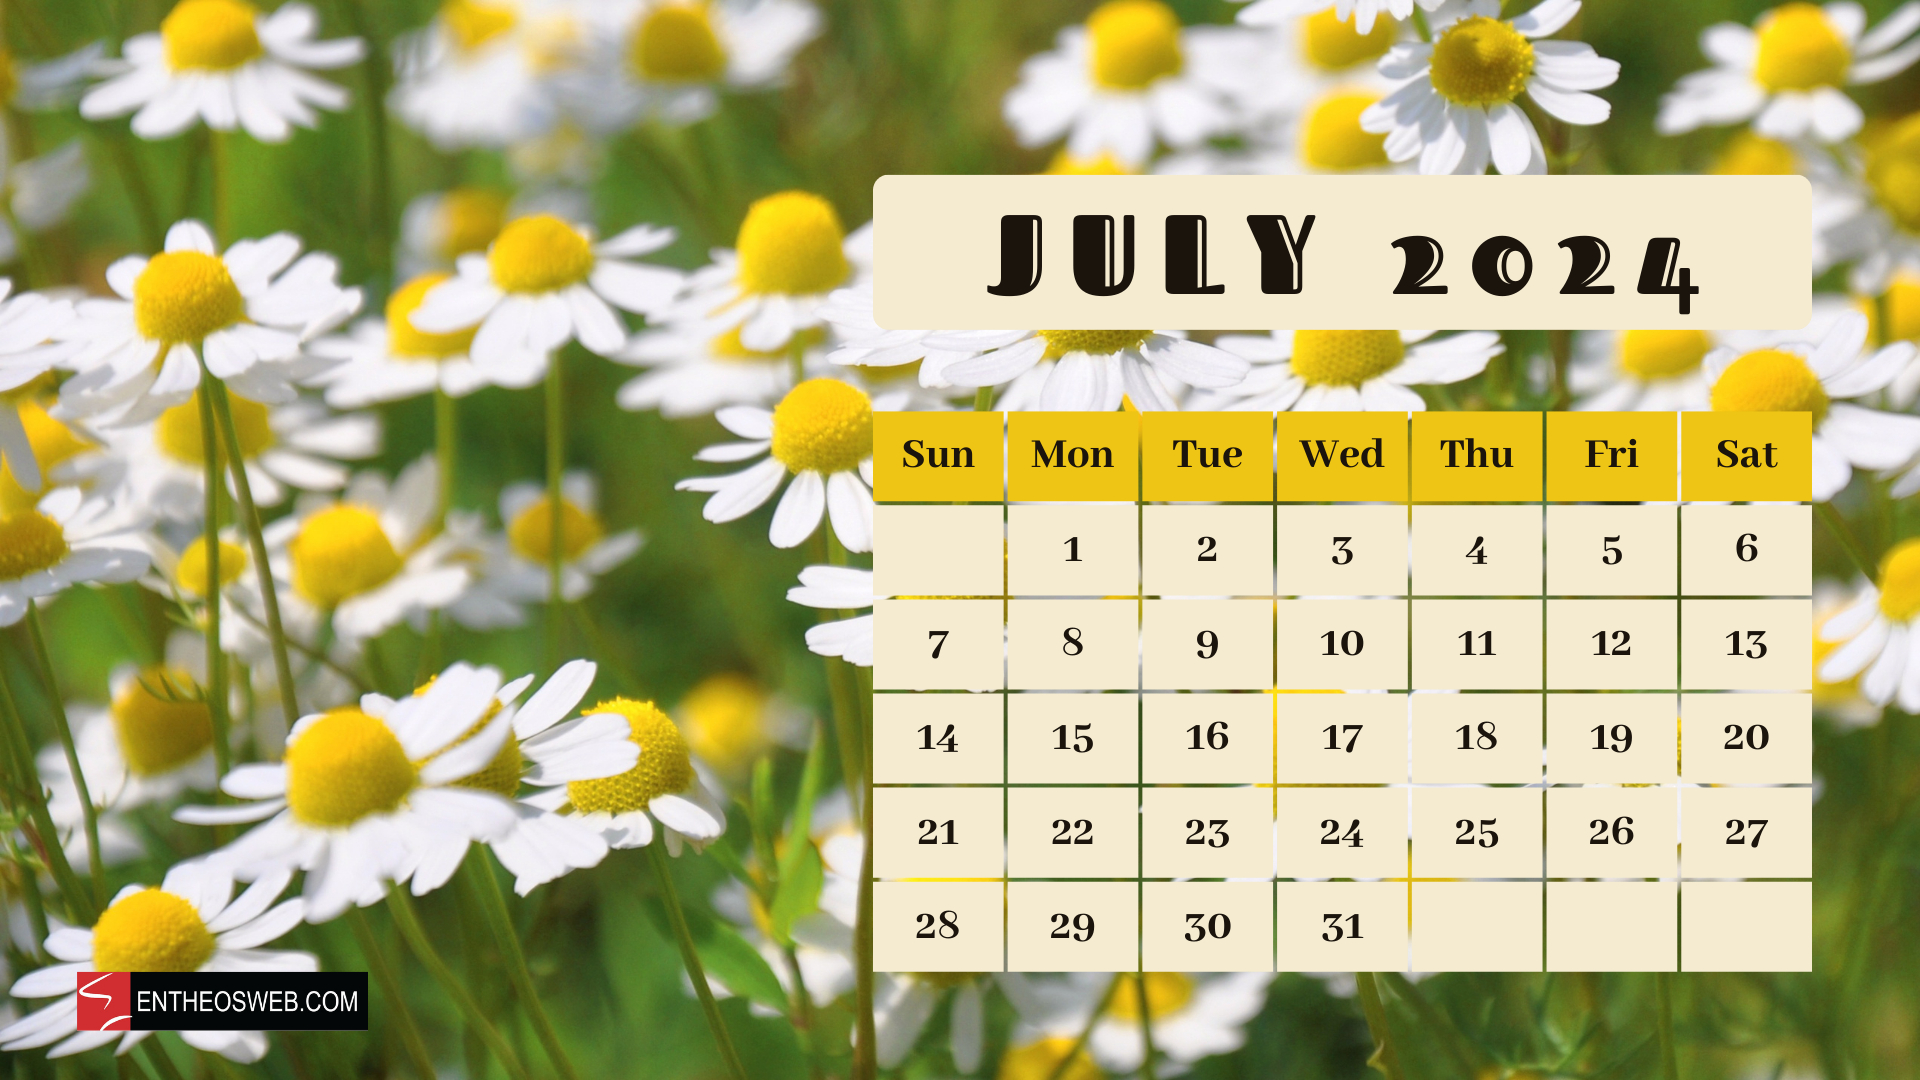 July 2024 Desktop Wallpaper Calendar | Entheosweb with July Calendar 2024 Background